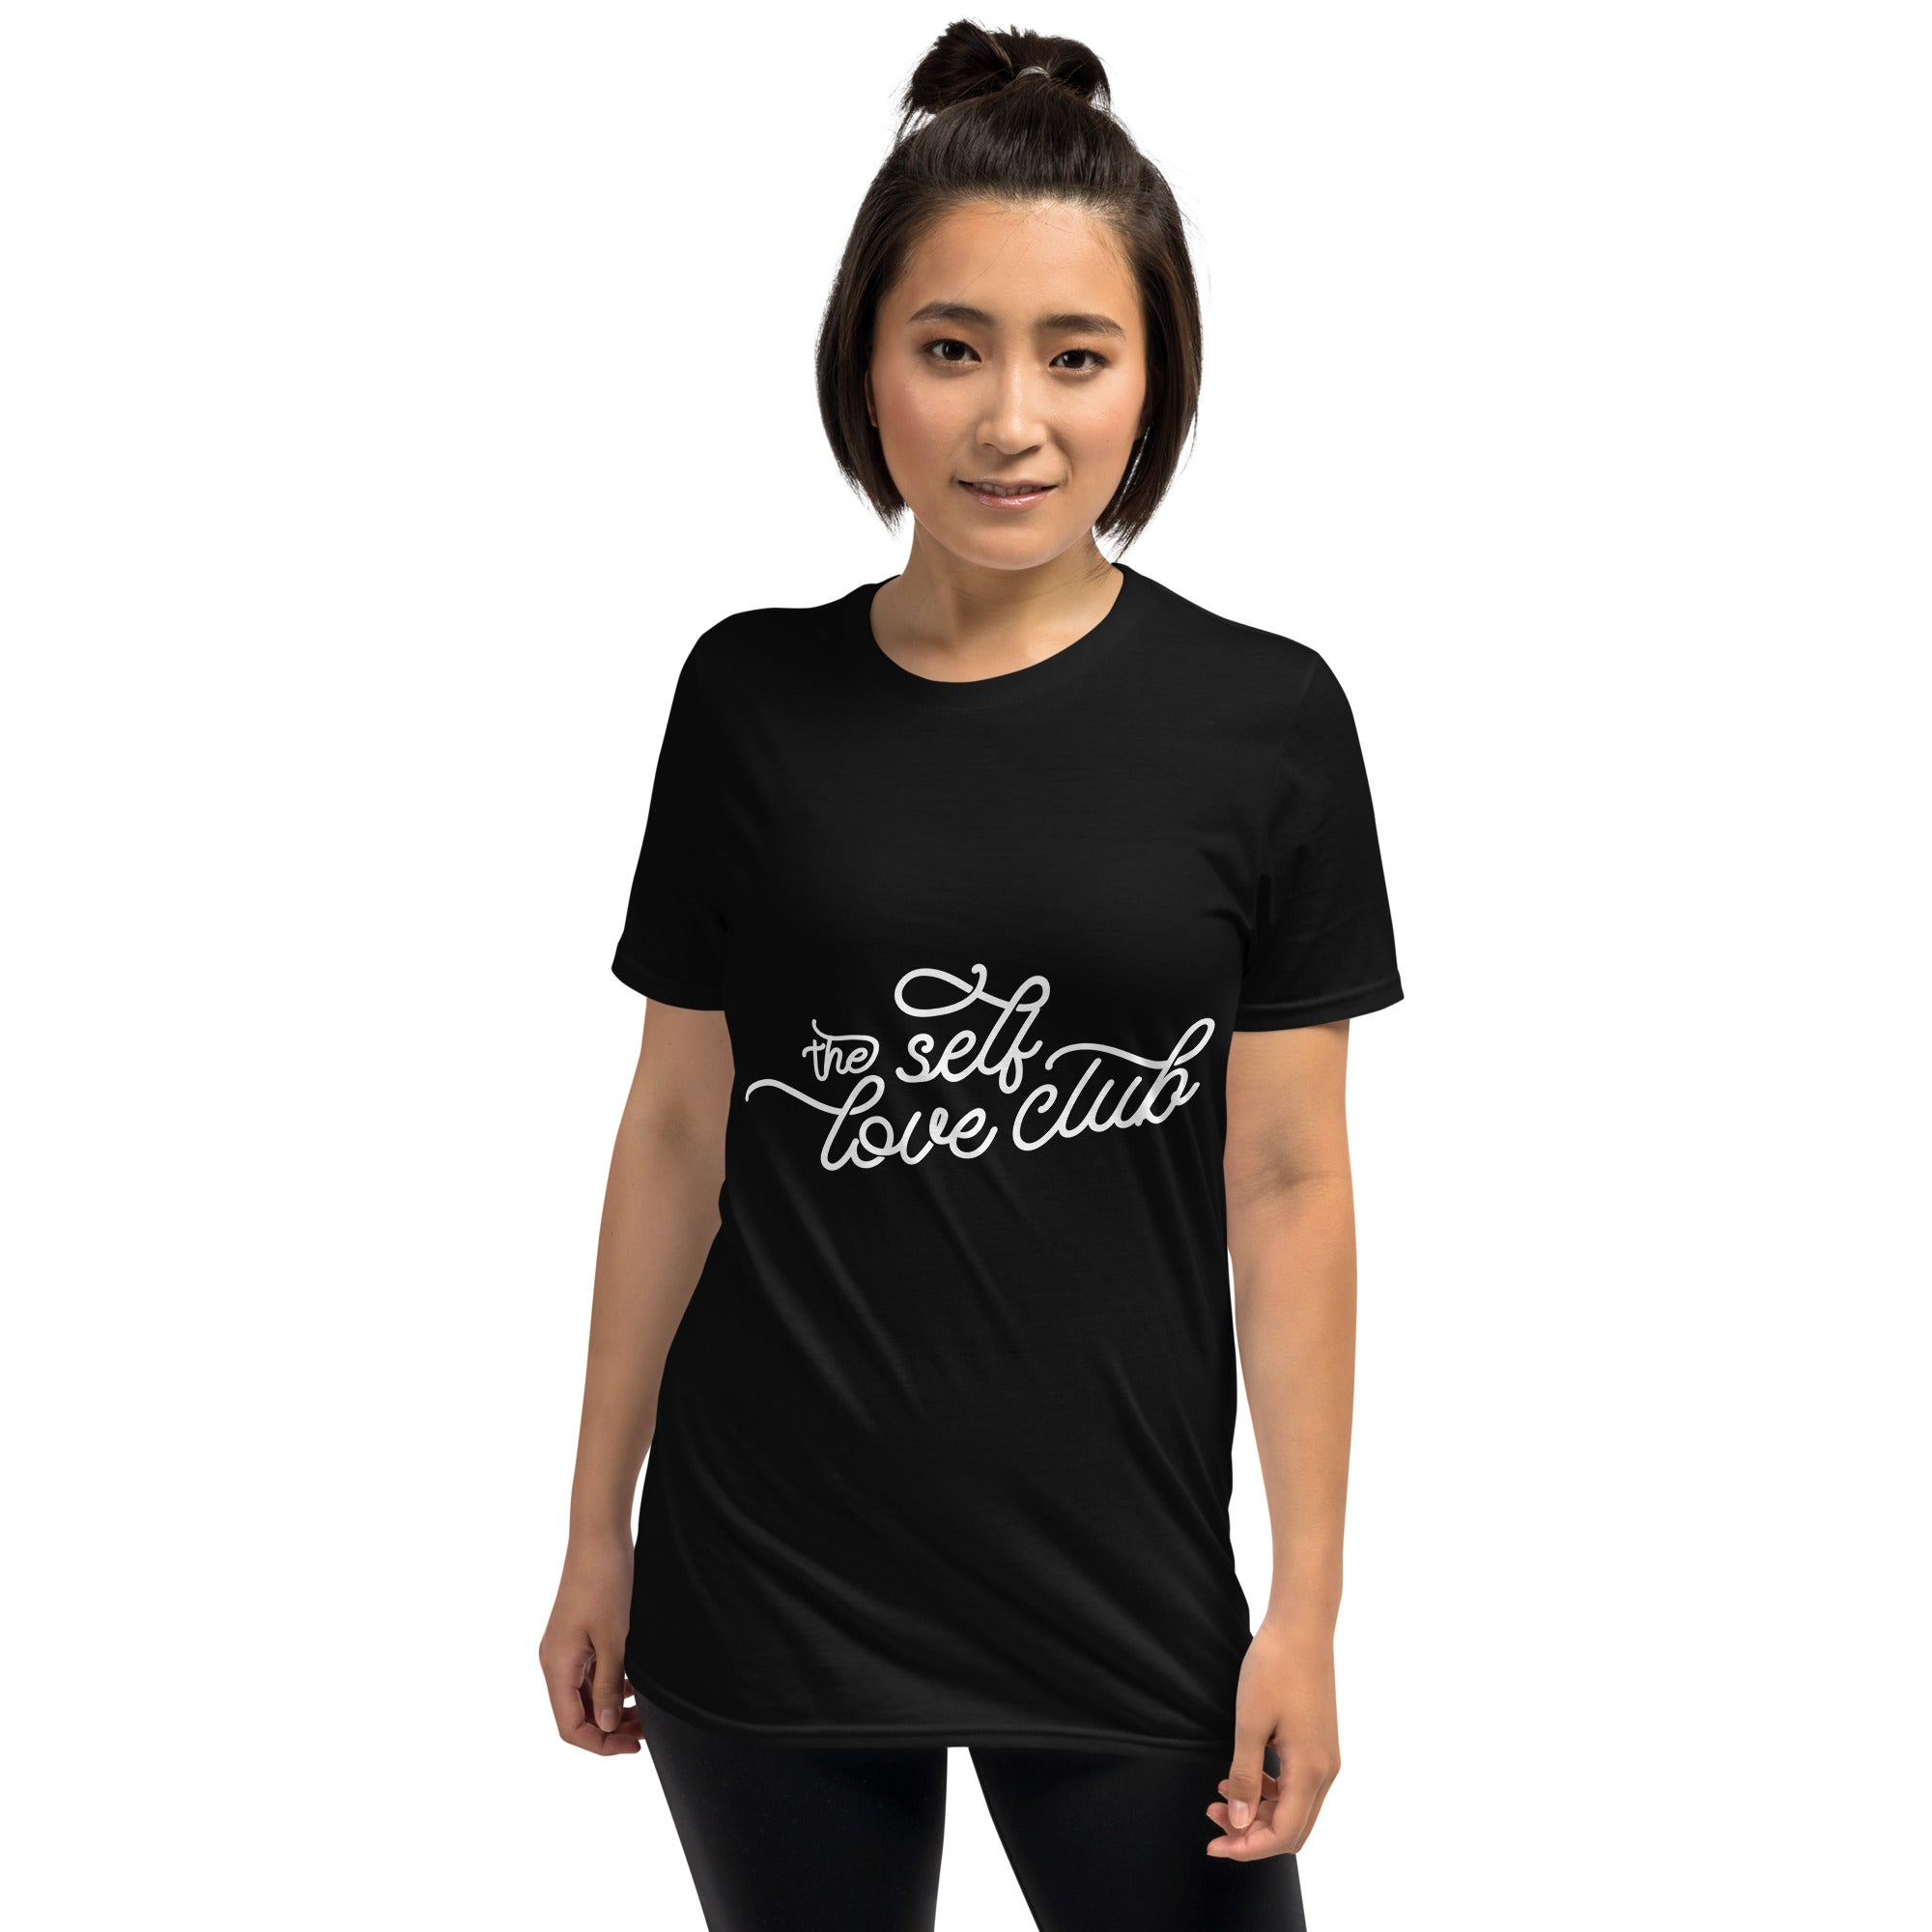 The Self-love Club - Short-Sleeve Unisex T-Shirt